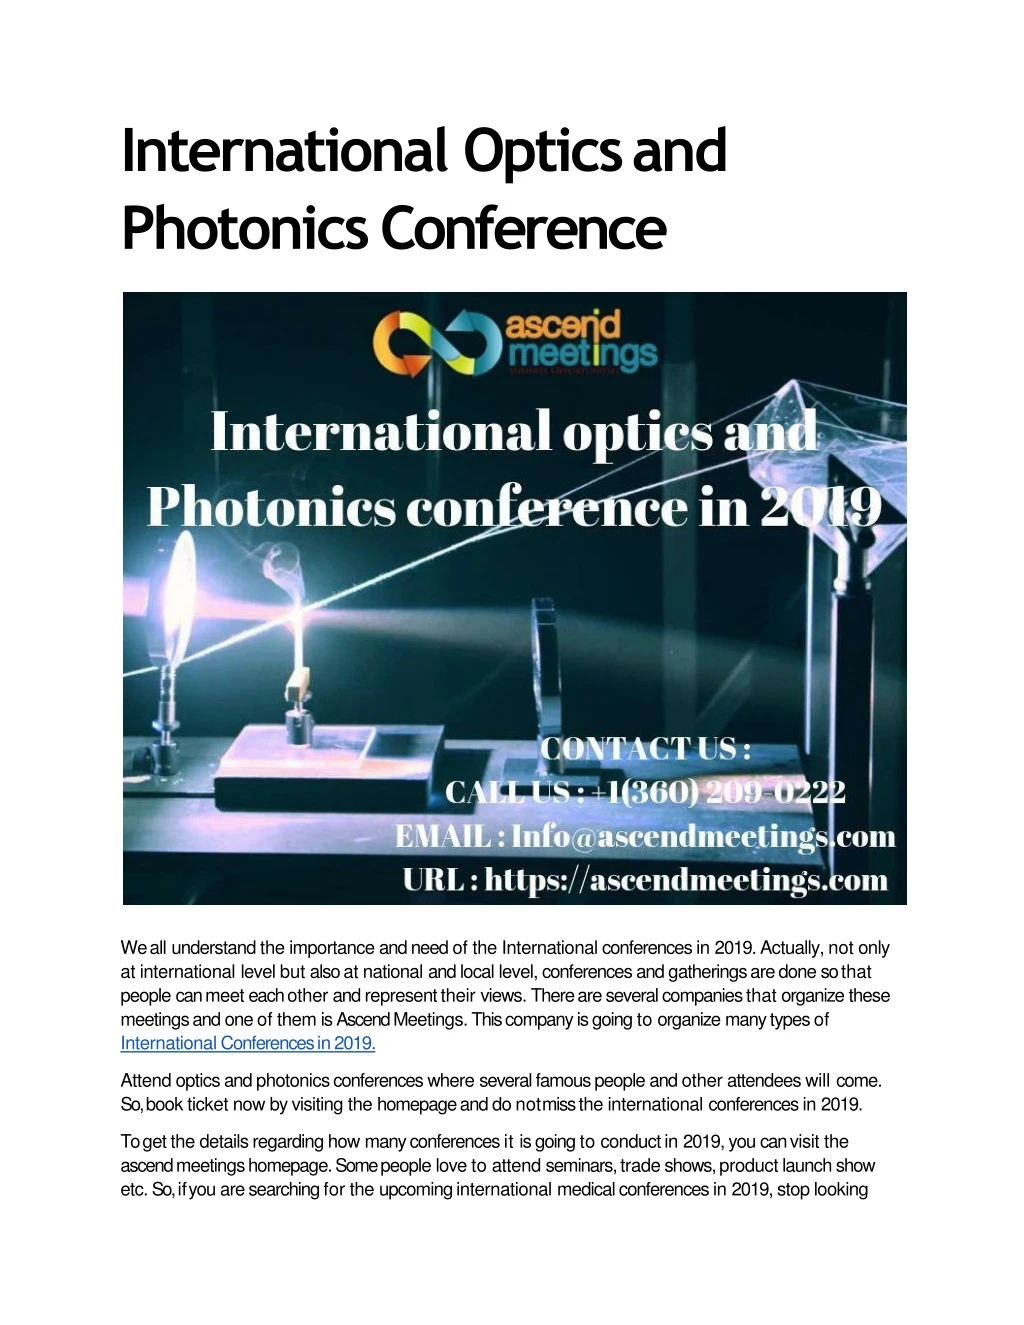 international optics and photonics conference